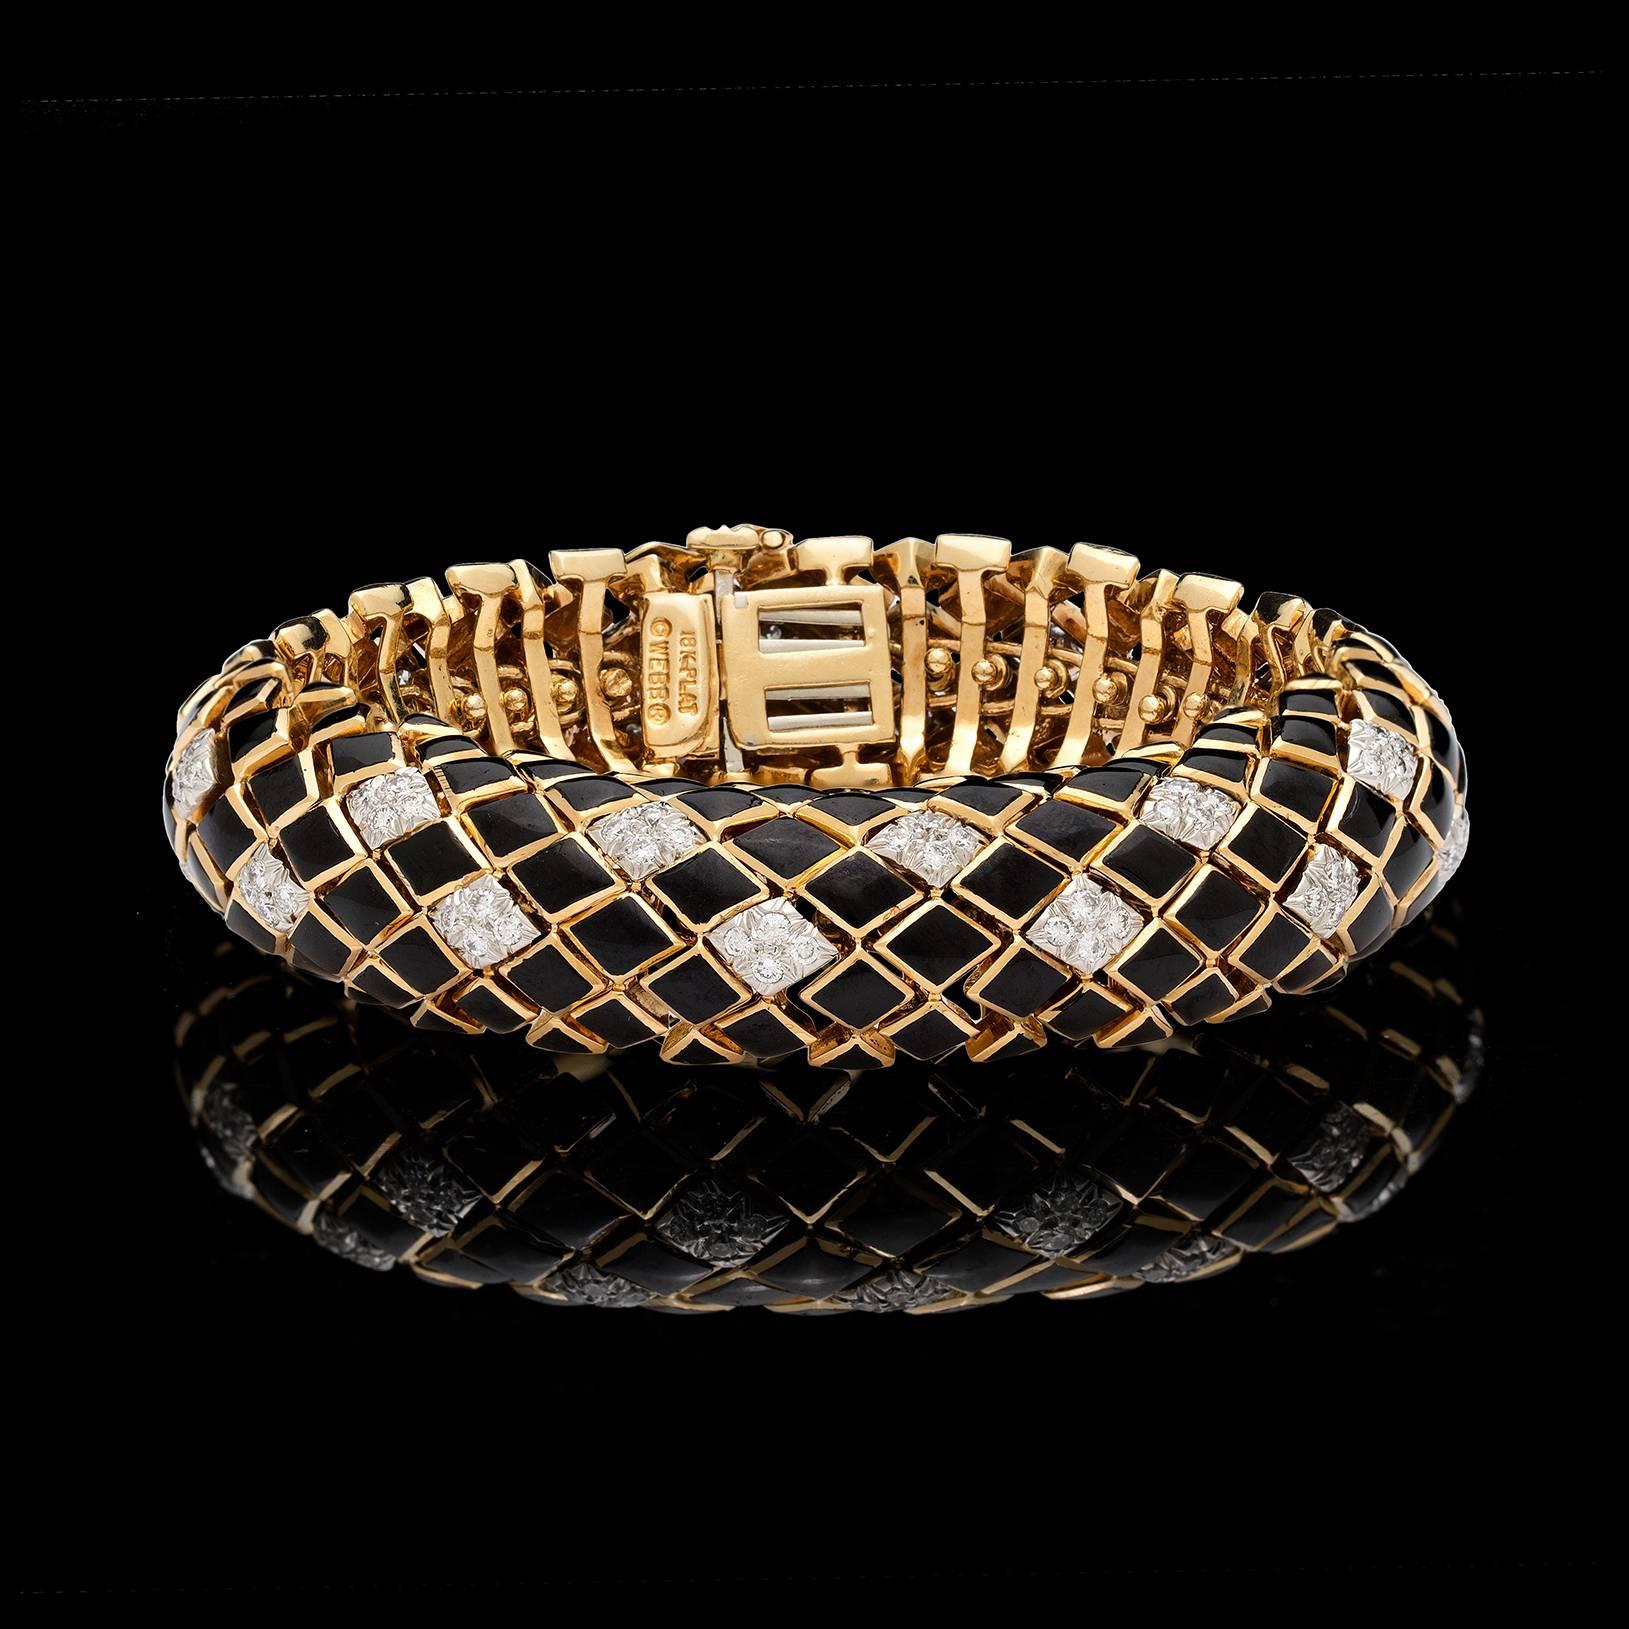 A rare David Webb flexible black enamel bracelet accented with 96 round brilliant cut diamonds totaling 2.40 carats.  This gorgeous piece measures approximately 7